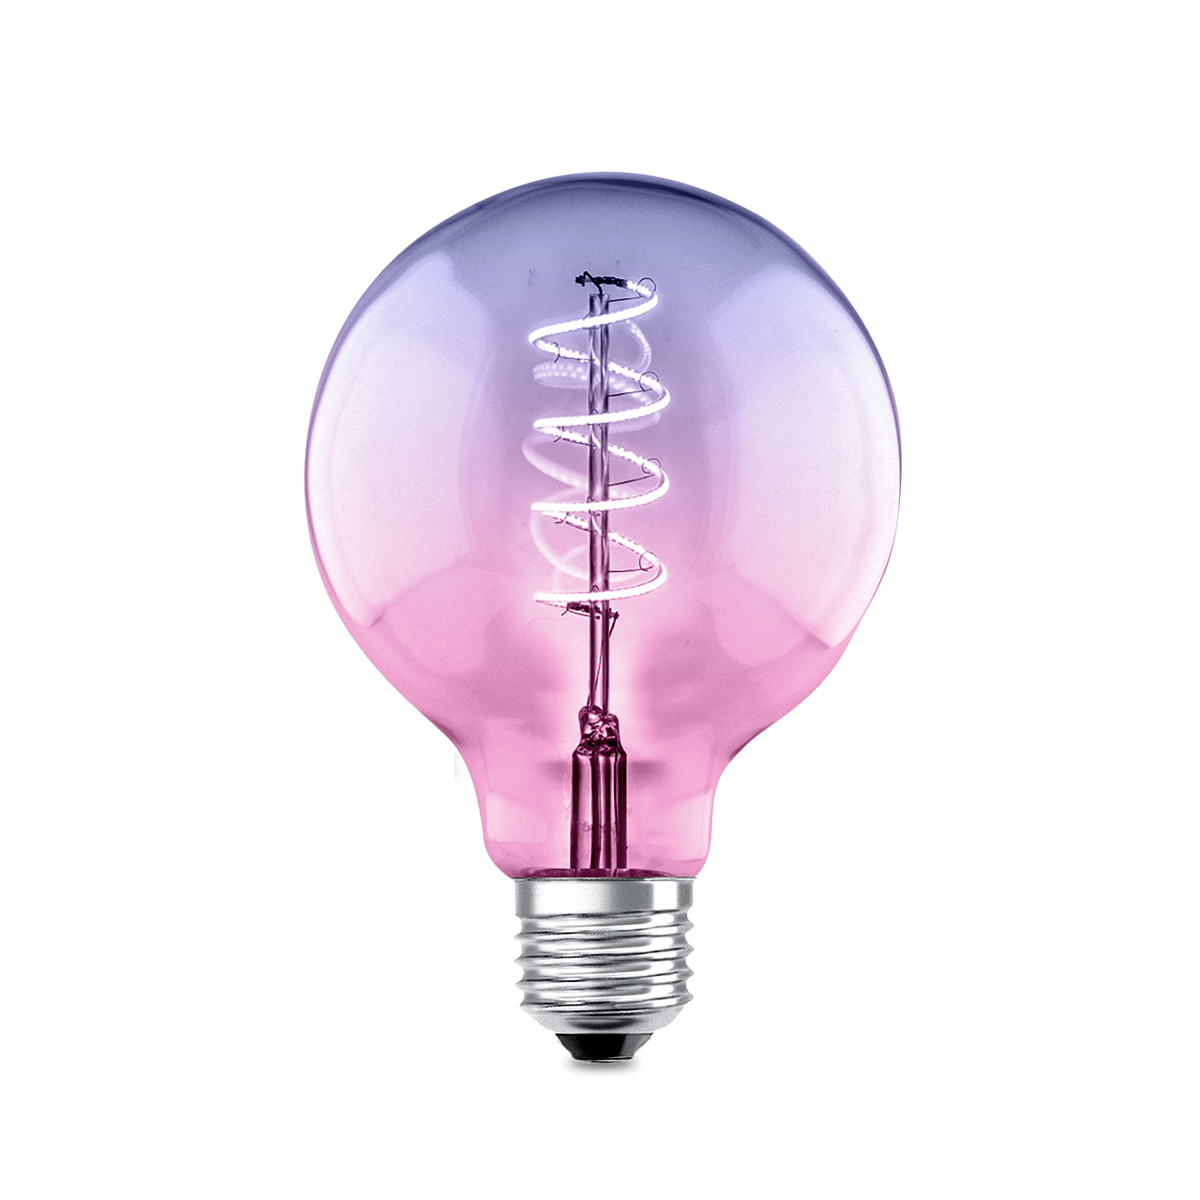 Tangla lighting - TLB-9005-04C - LED Light Bulb Single Spiral filament - G95 4W gradient color bulb - blue - non dimmable - E27